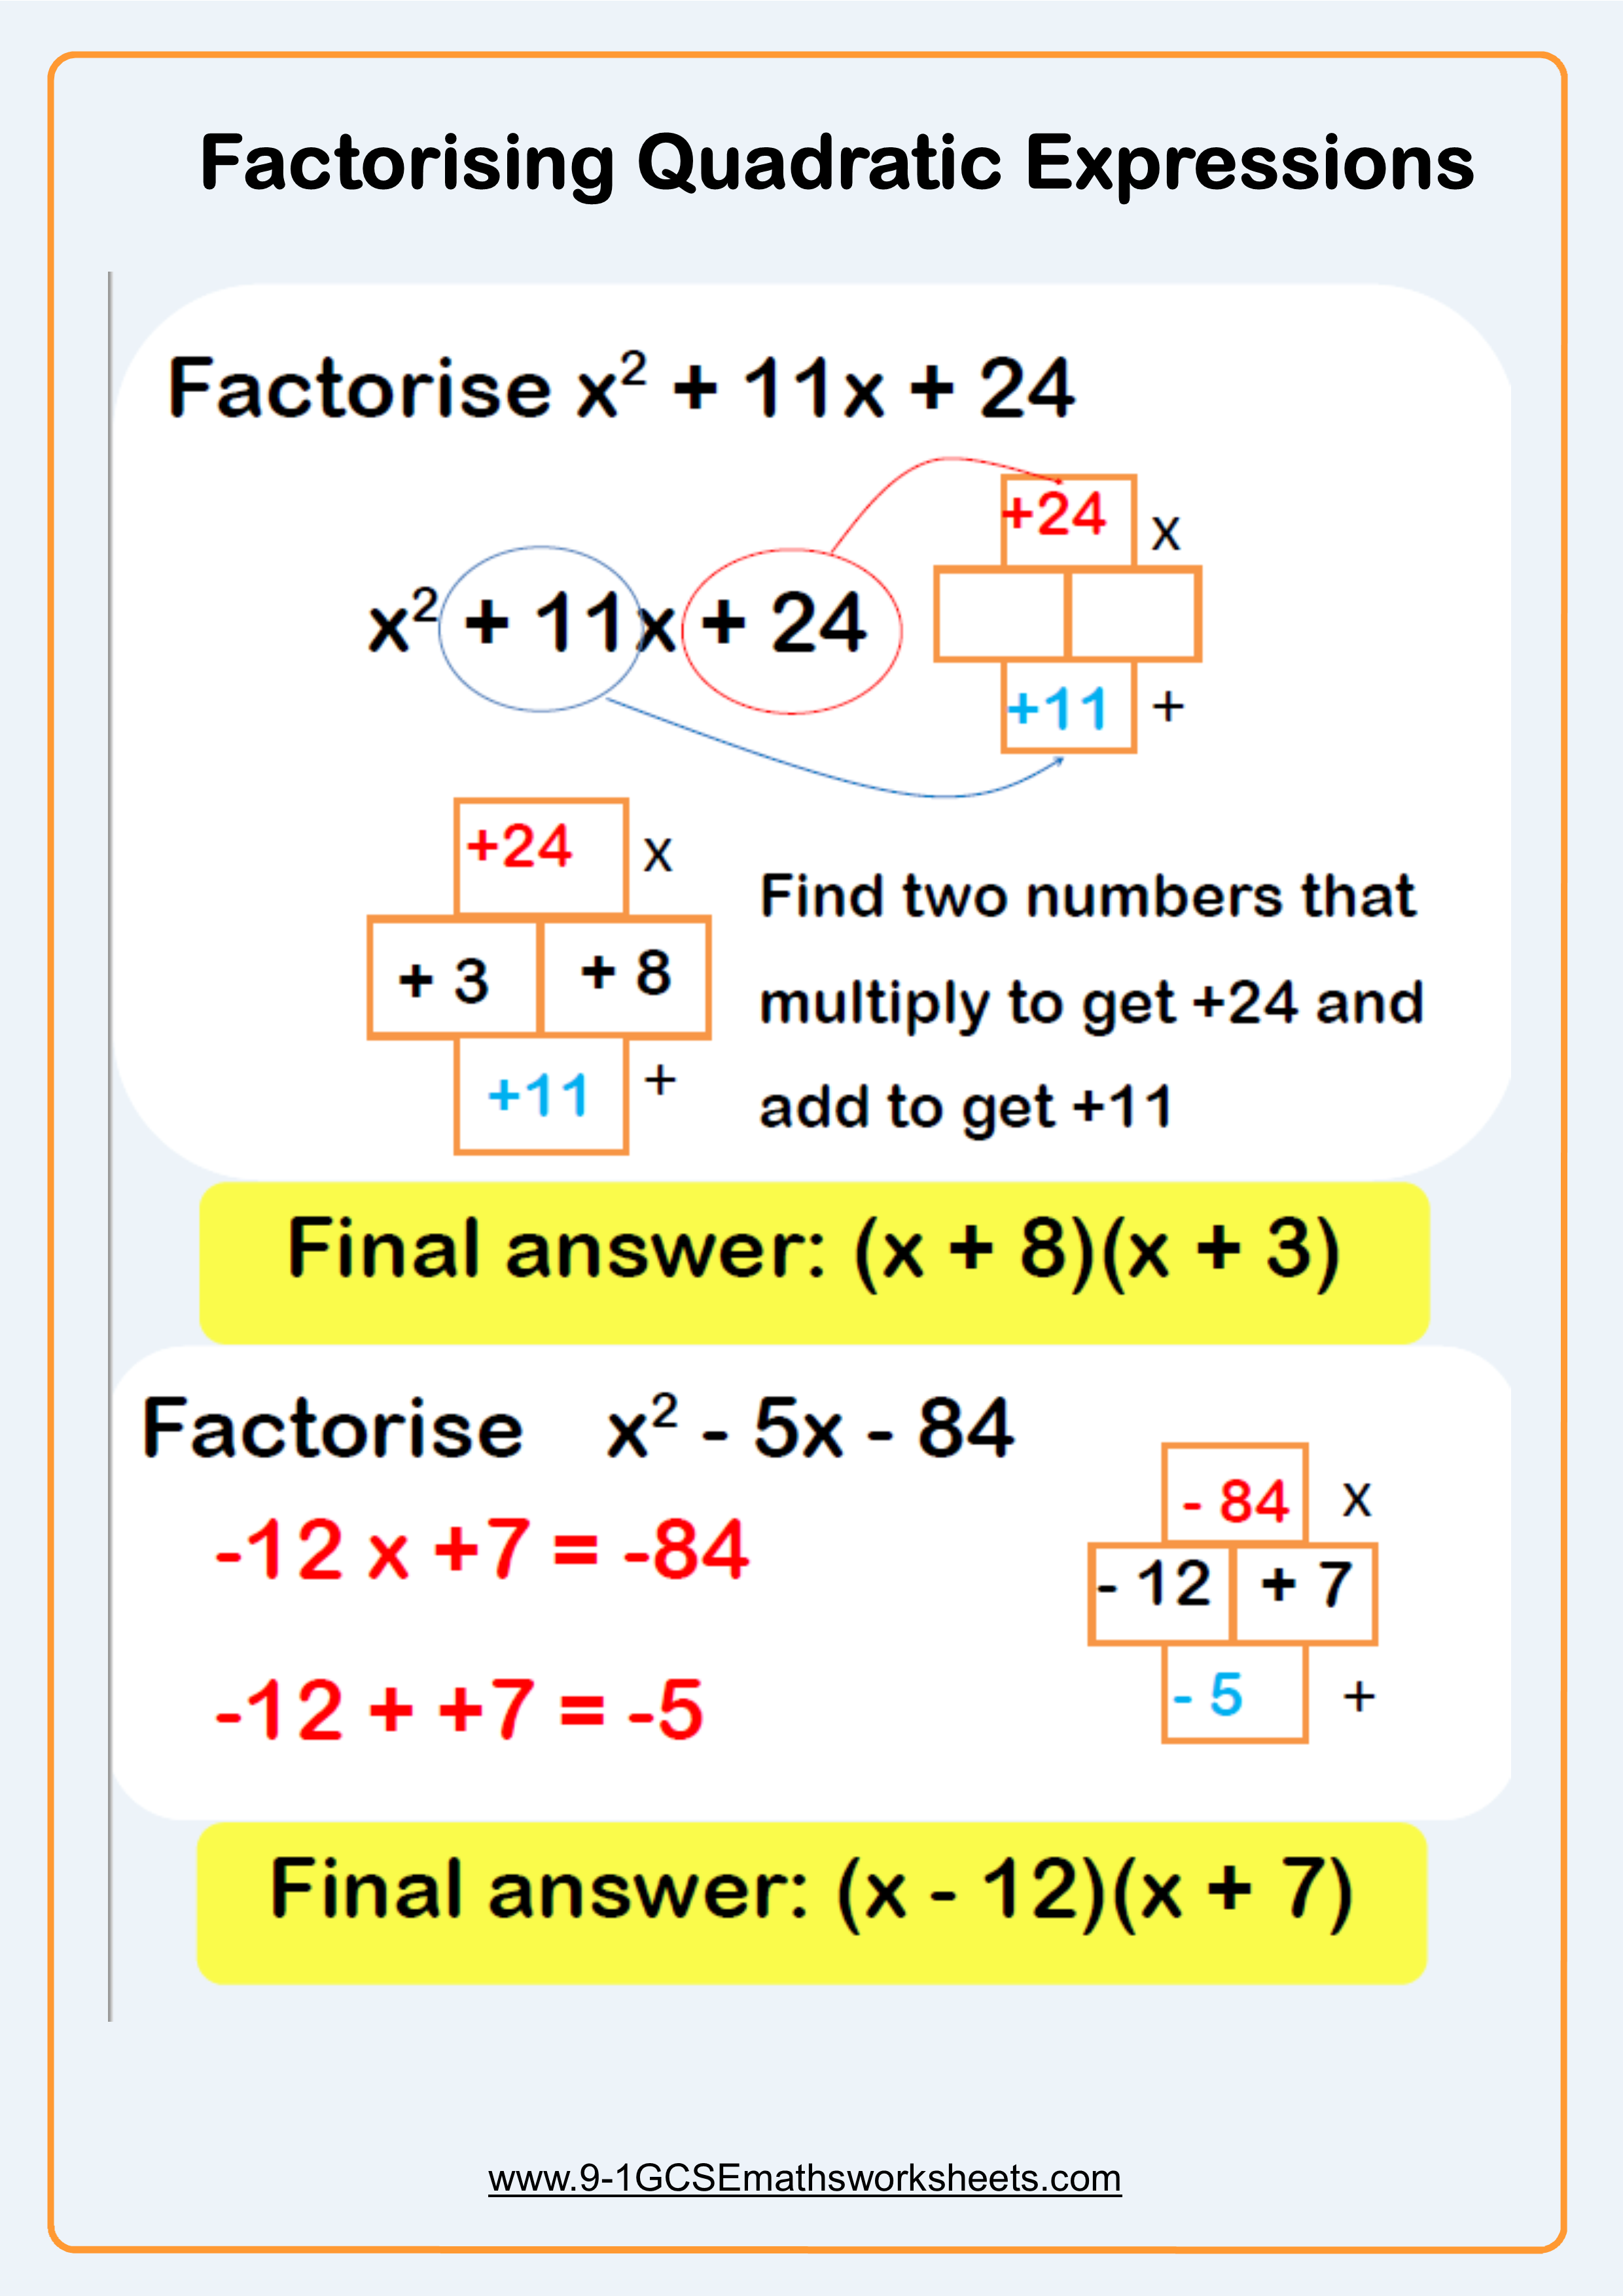 Factorising Quadratics Worksheets - New & Engaging  Cazoomy Regarding Factoring Quadratic Expressions Worksheet Answers